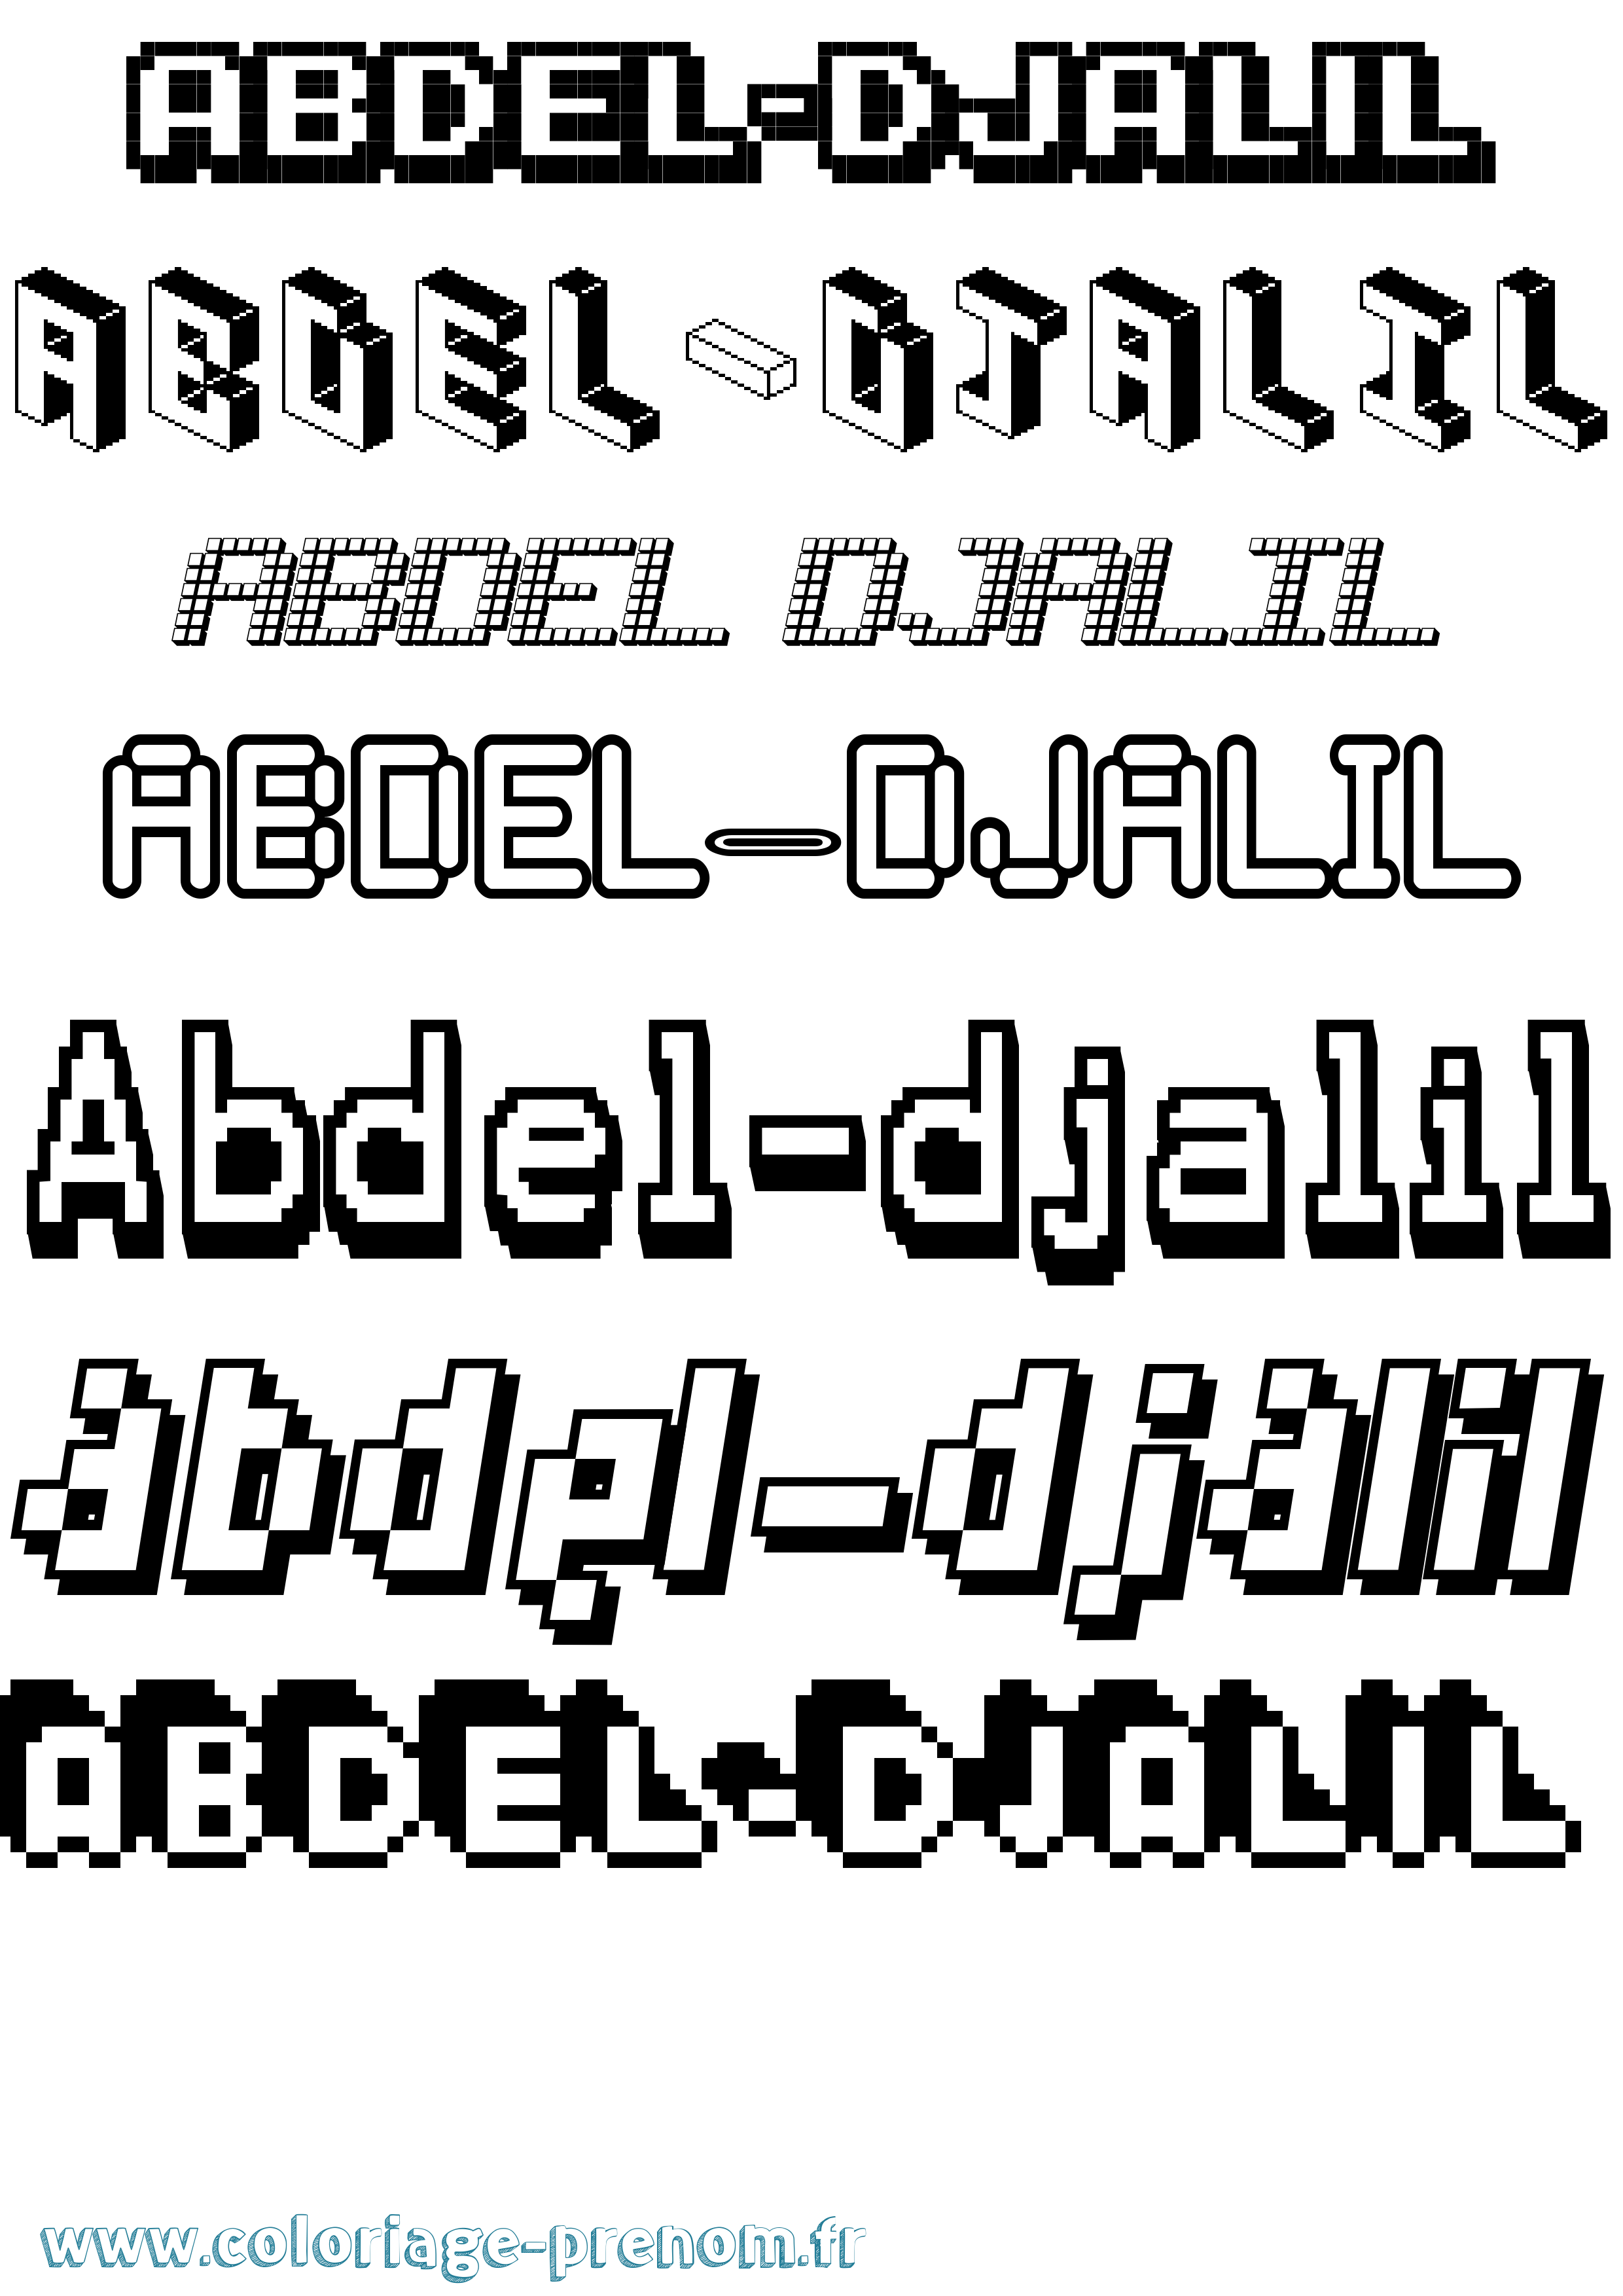 Coloriage prénom Abdel-Djalil Pixel